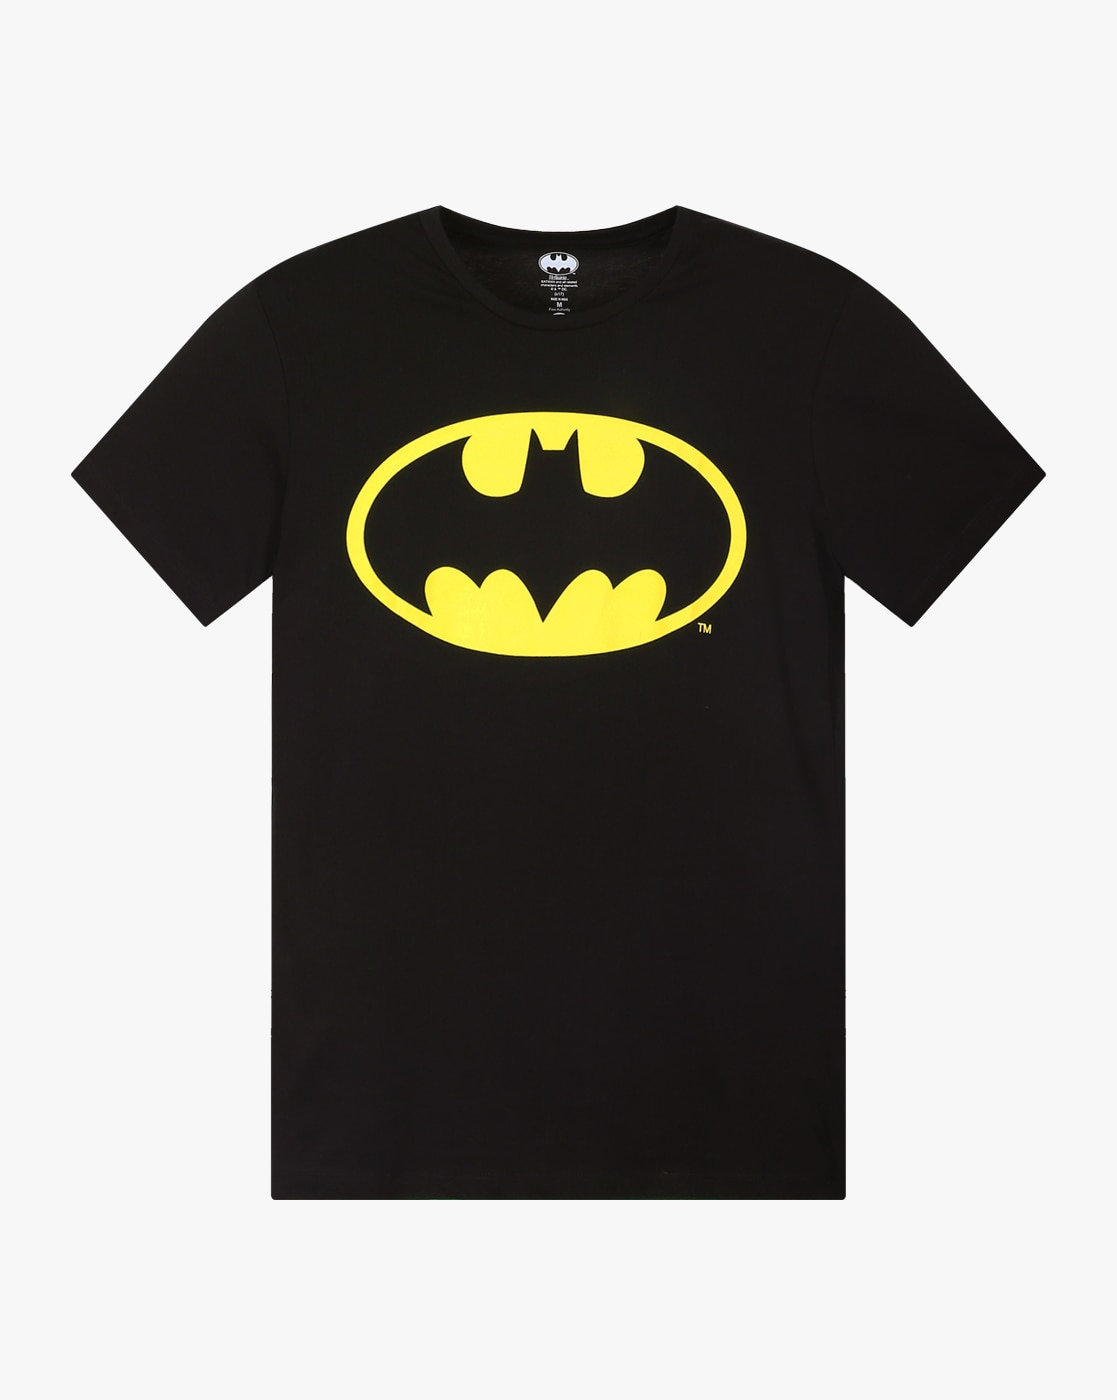 Different Types of Batman T Shirts